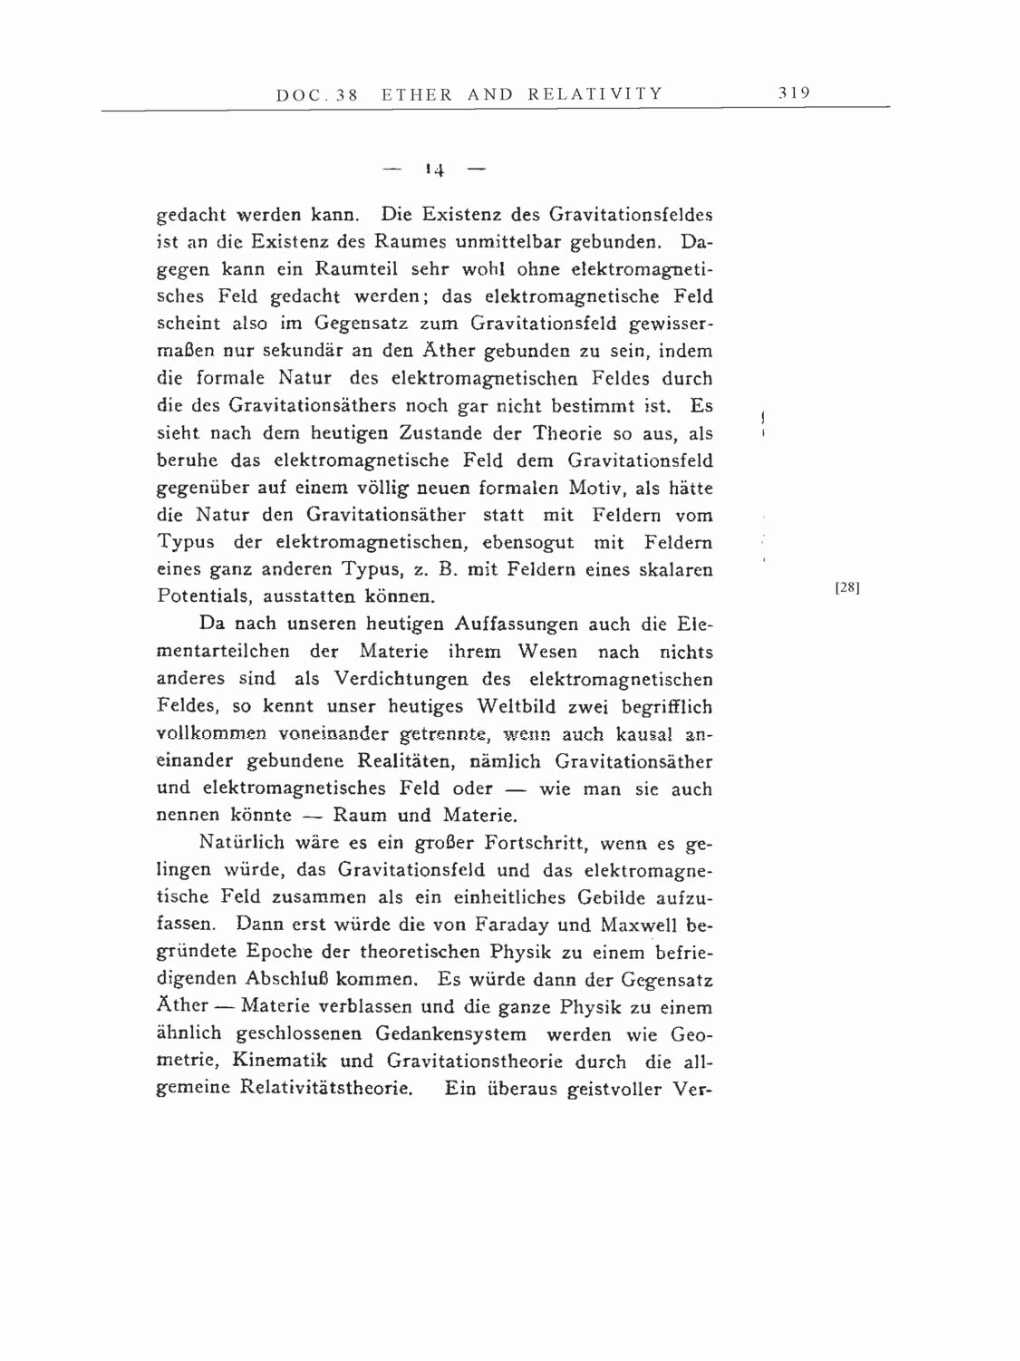 Volume 7: The Berlin Years: Writings, 1918-1921 page 319